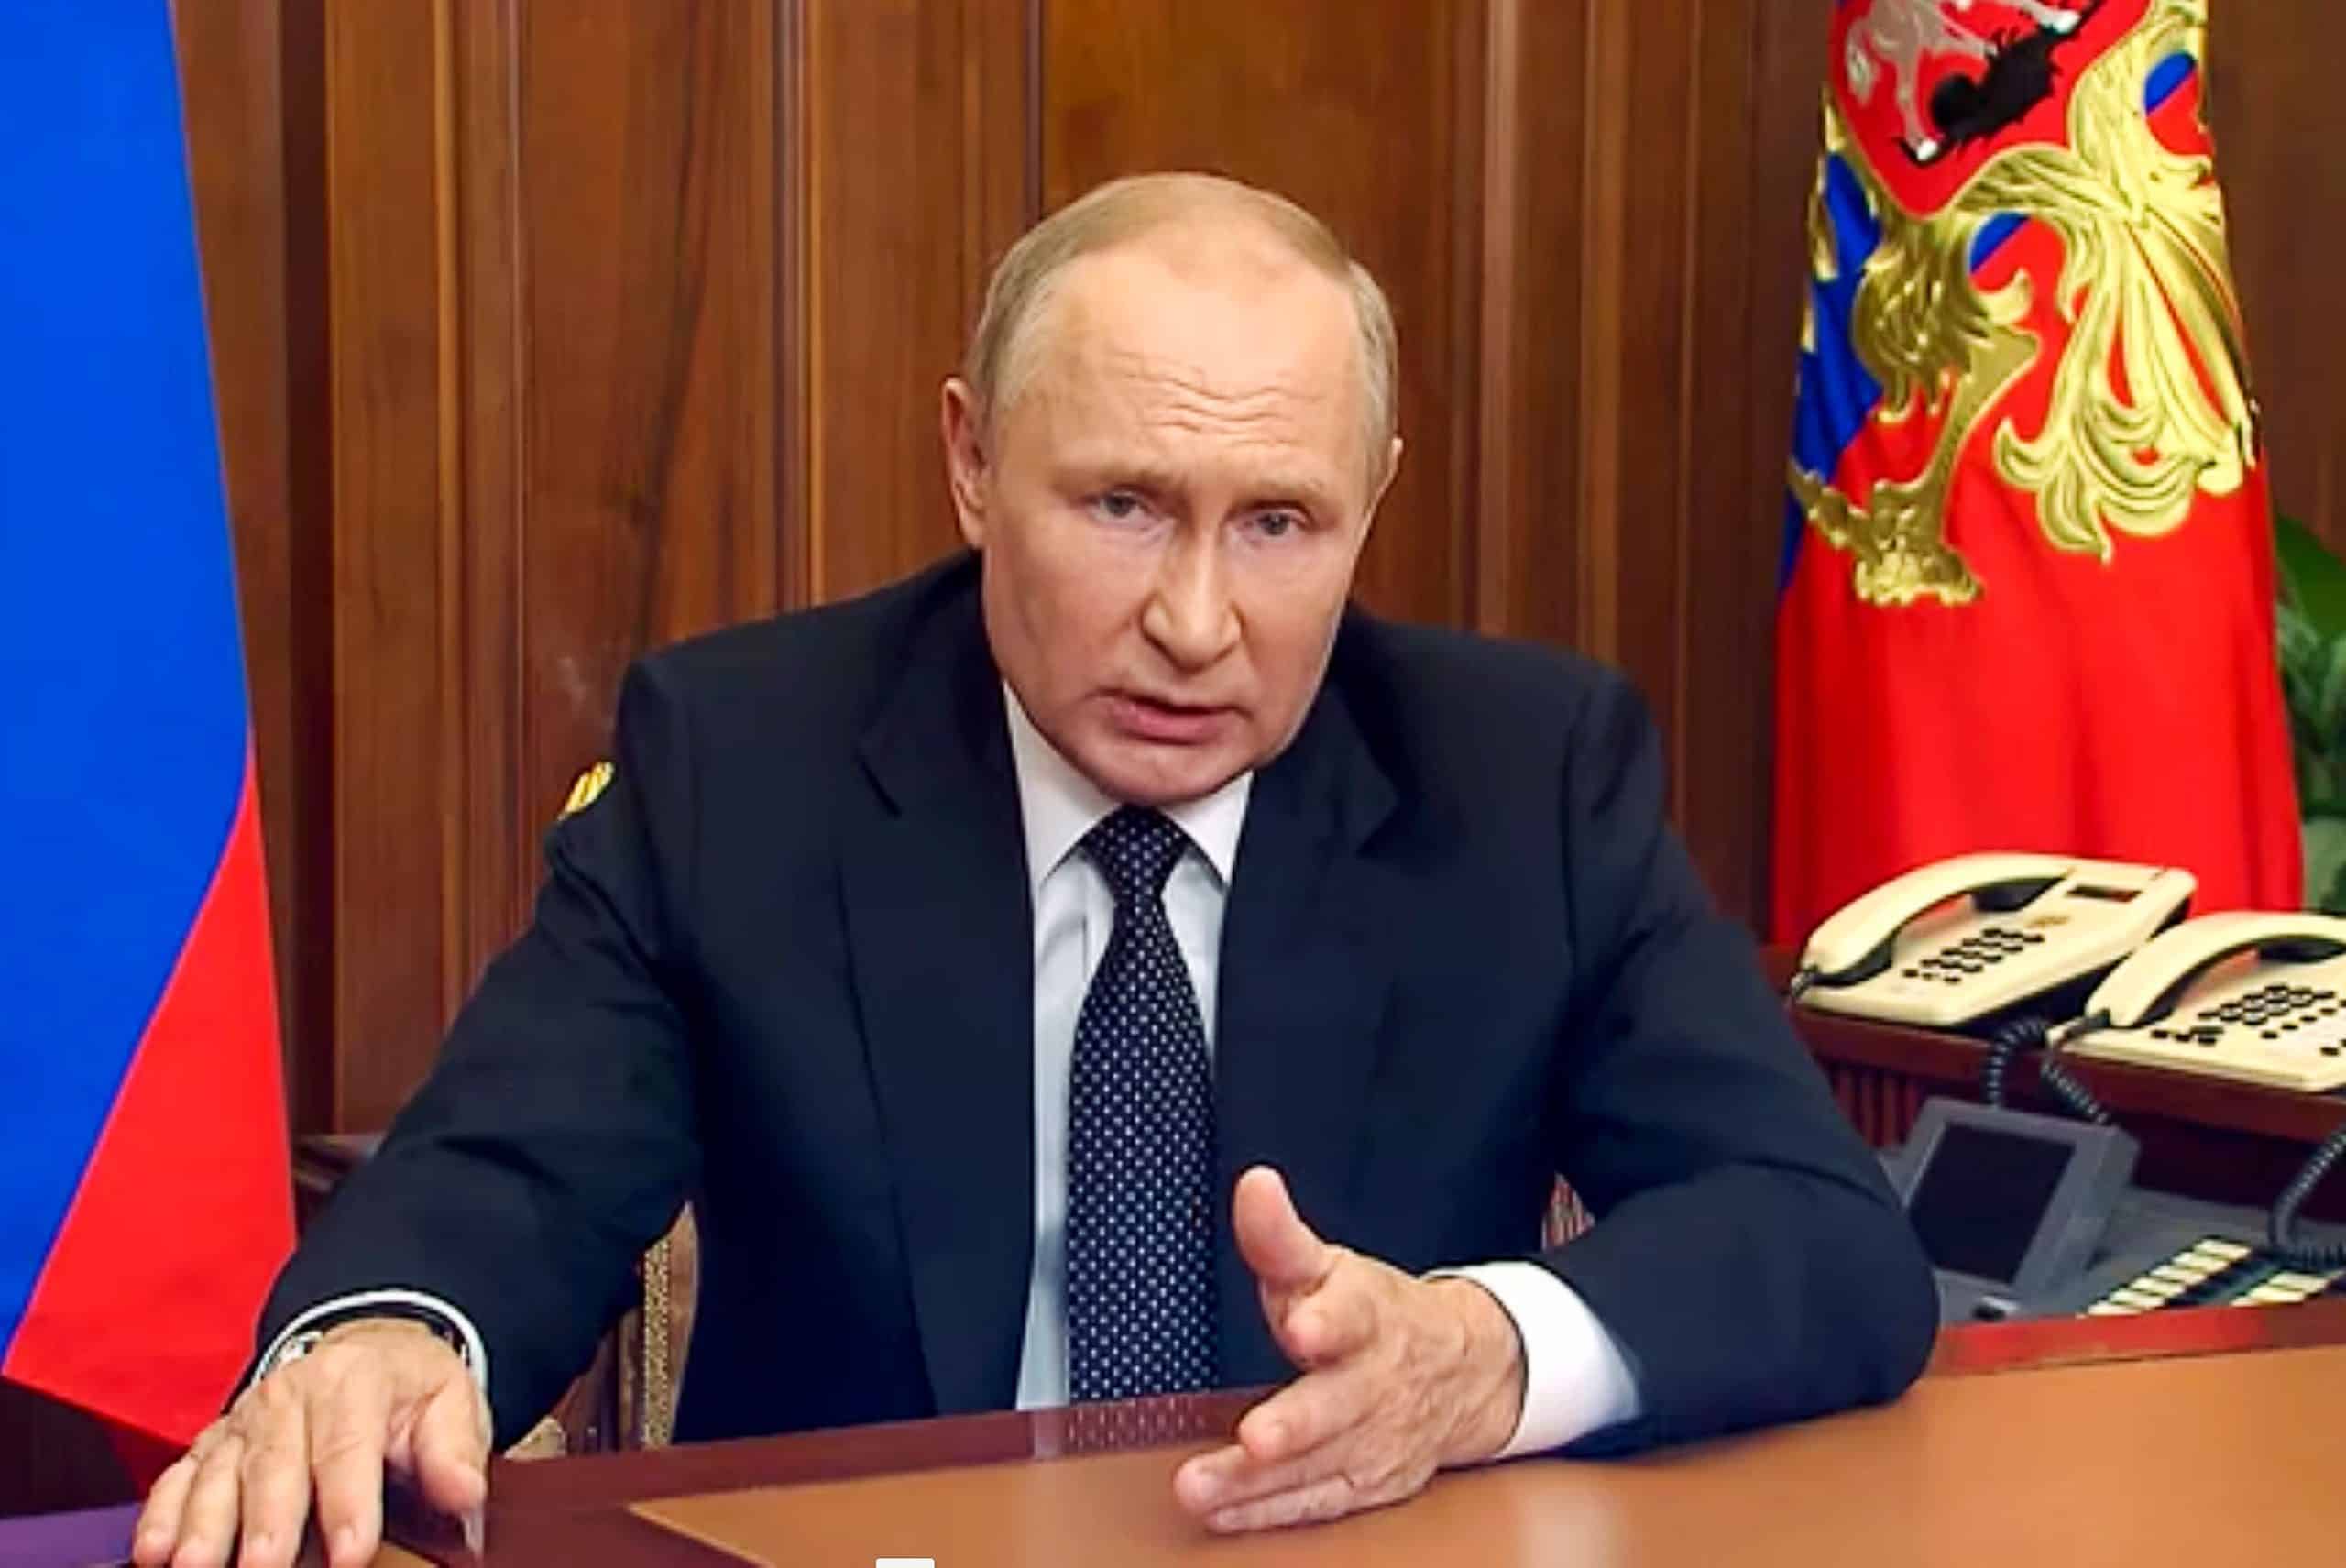 Putin calls up 300,000 reservists and threatens West as Ukraine war escalates